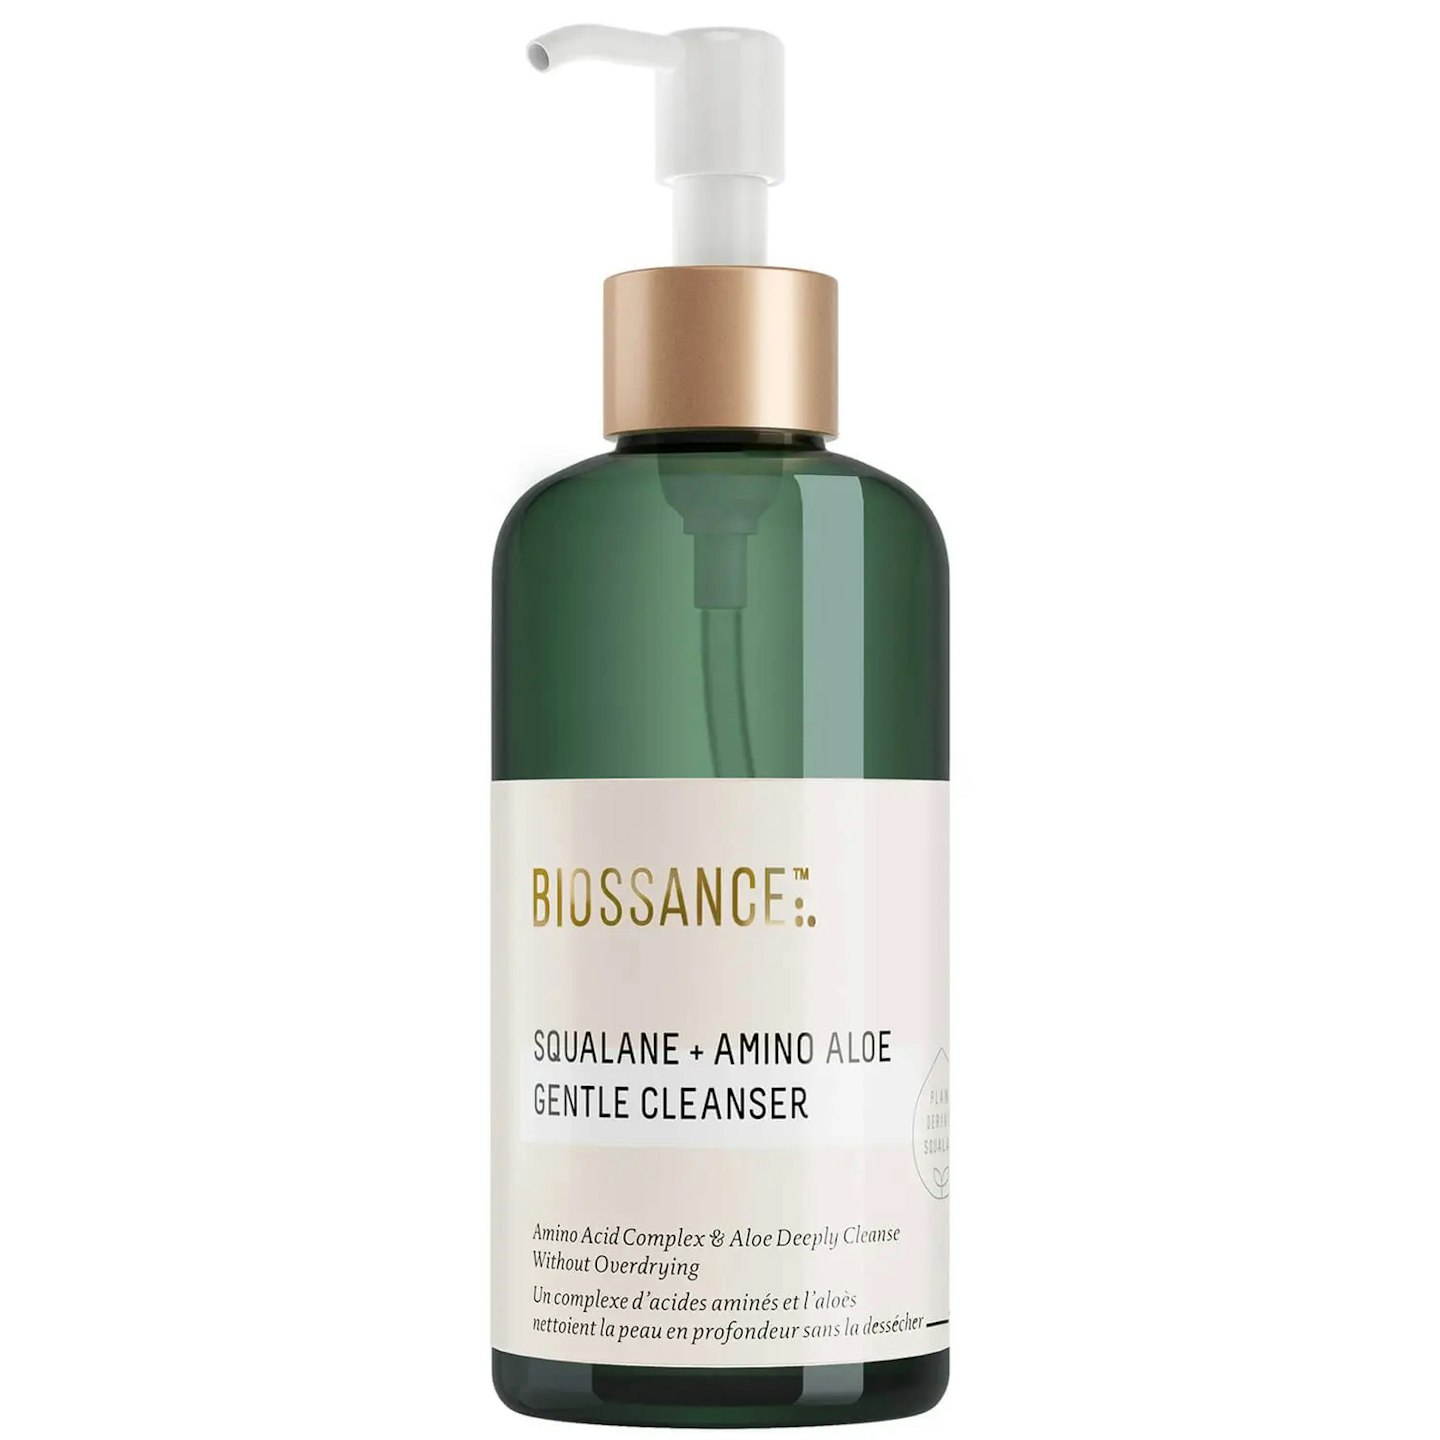 Biossance Squalane + Amino Aloe Gentle Cleanser